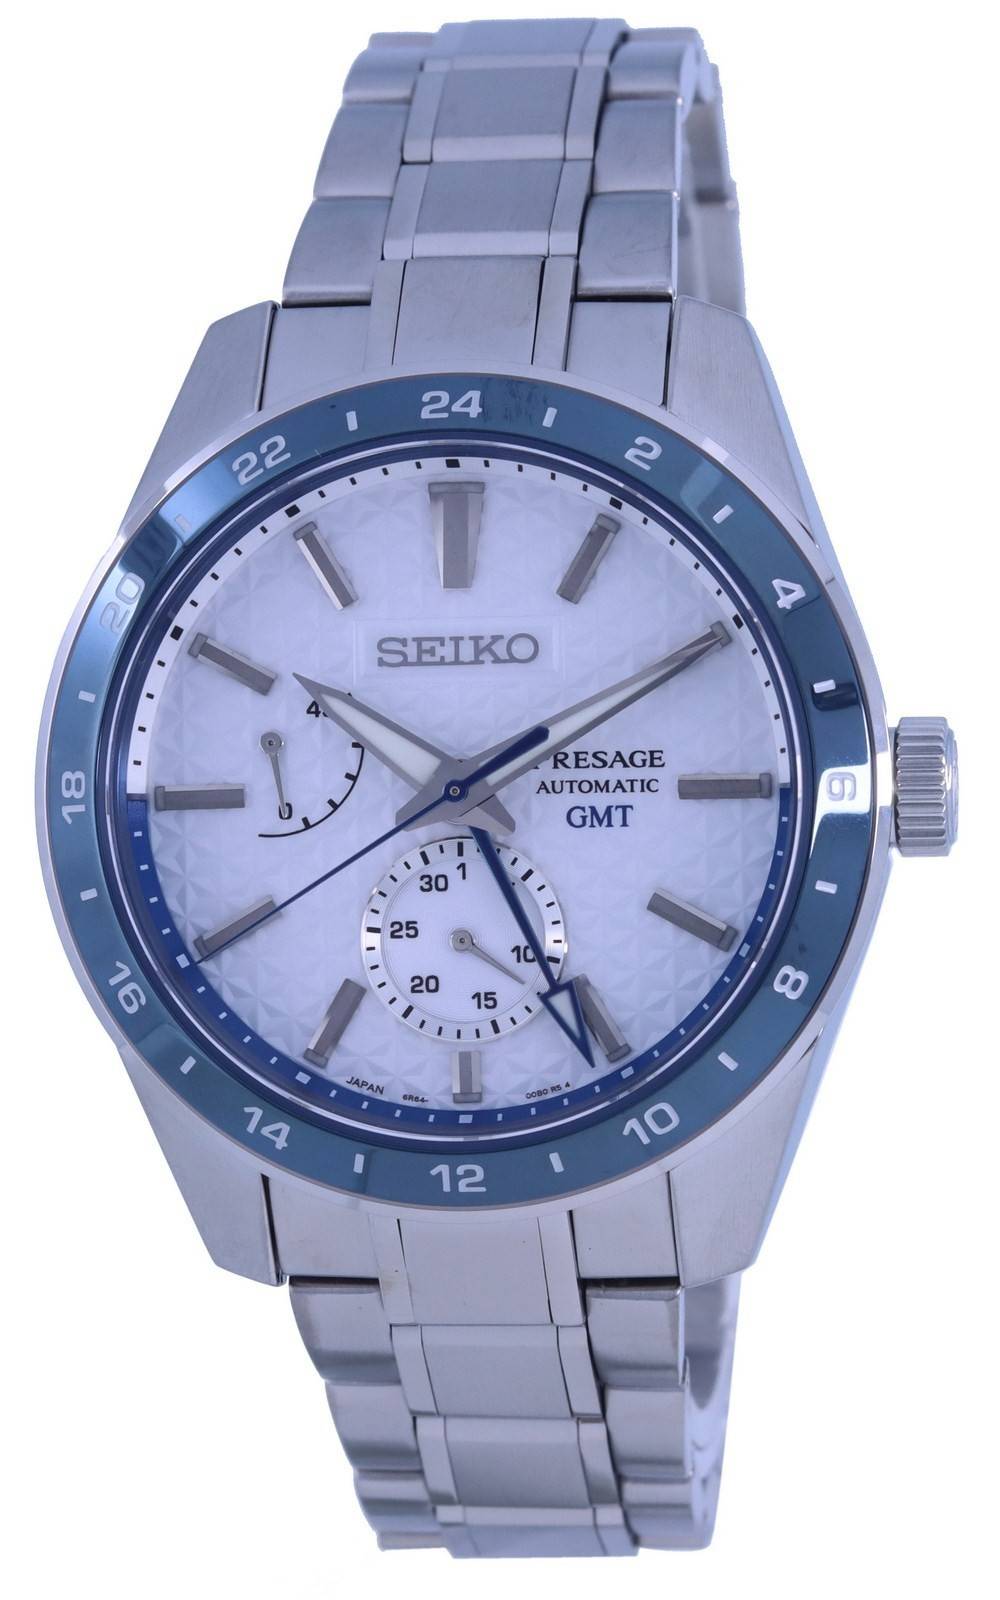 Đồng hồ Seiko Presage Sharp Edged GMT Limited Edition Automatic SPB223  SPB223J1 SPB223J 100M Đồng hồ nam vi